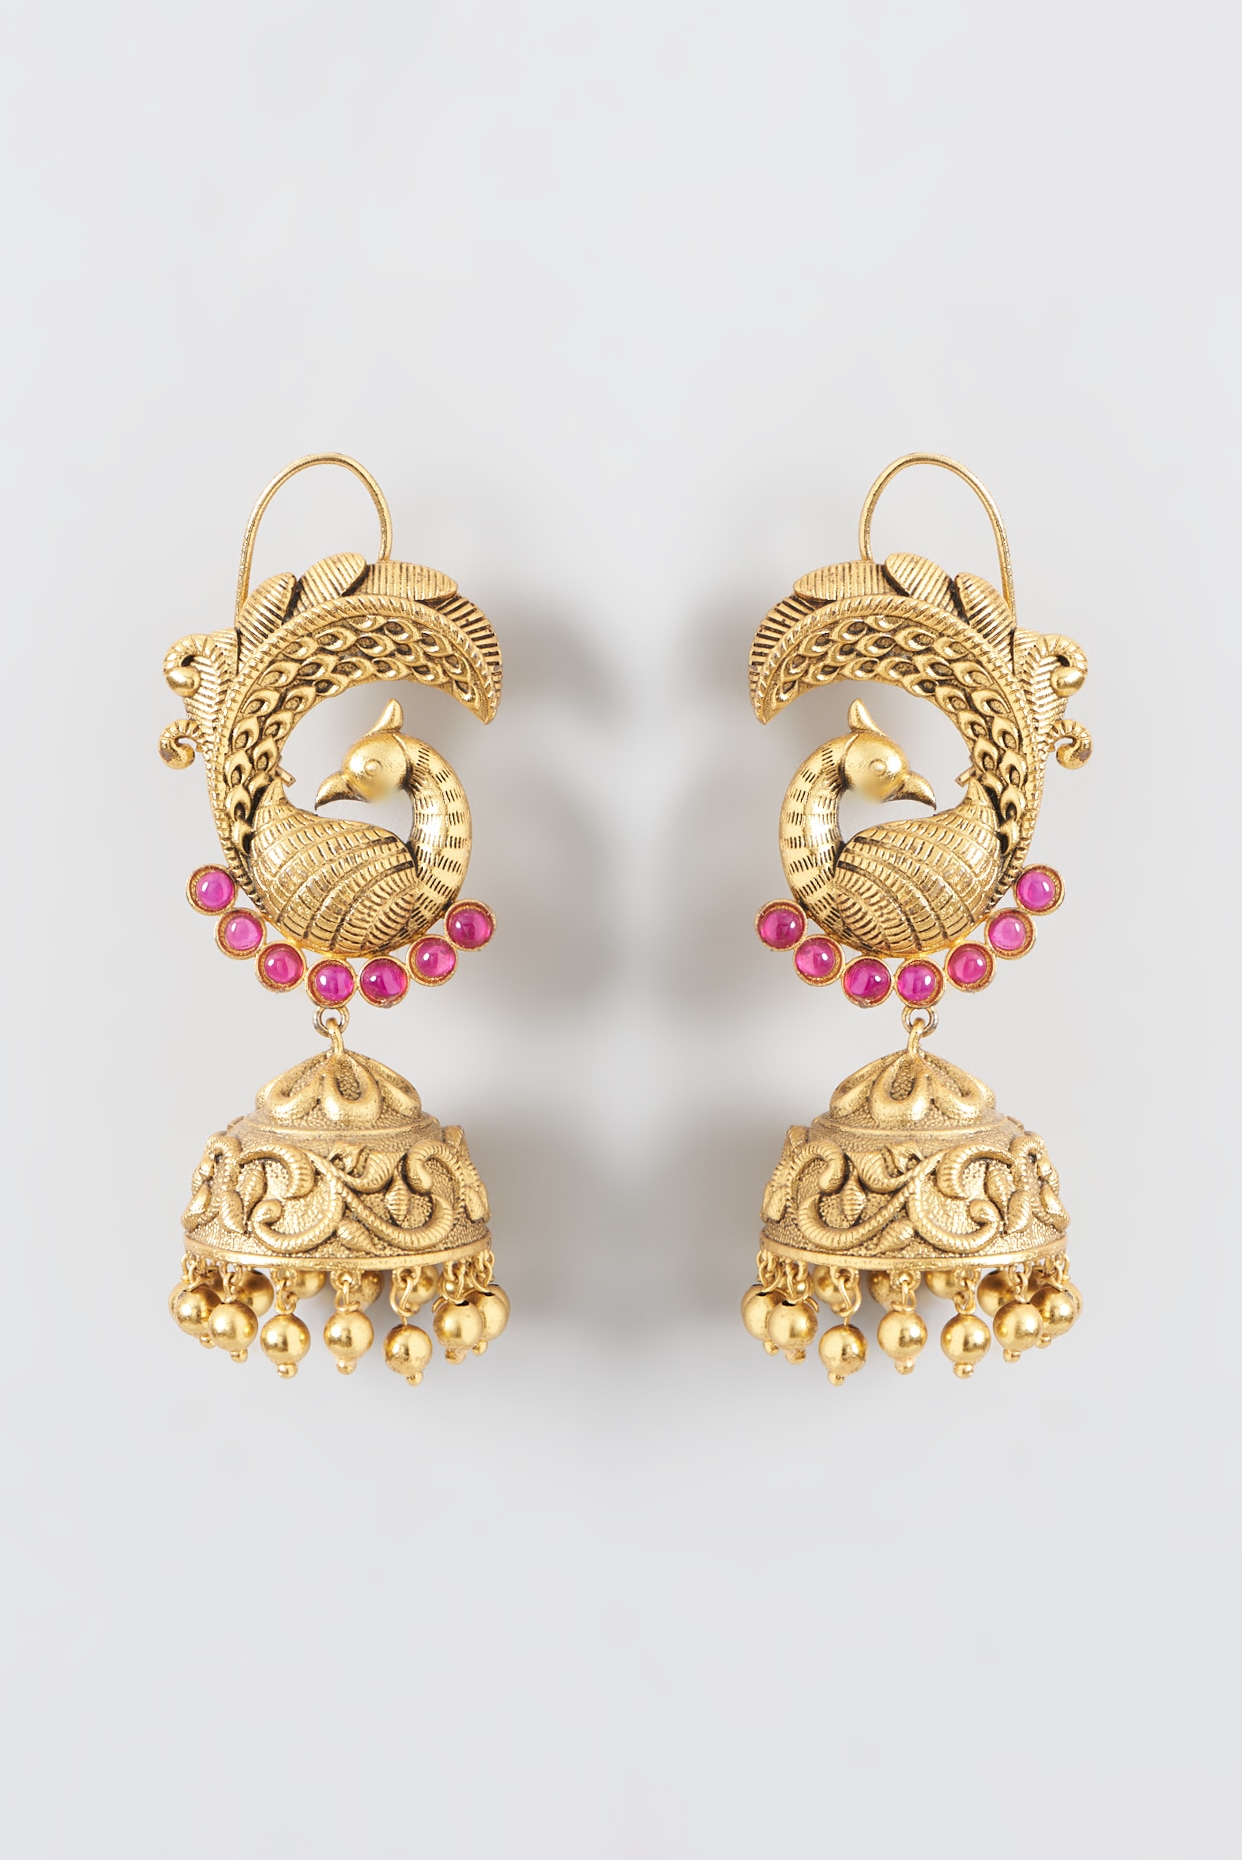 Earrings, Anjali Jain | Vogue India